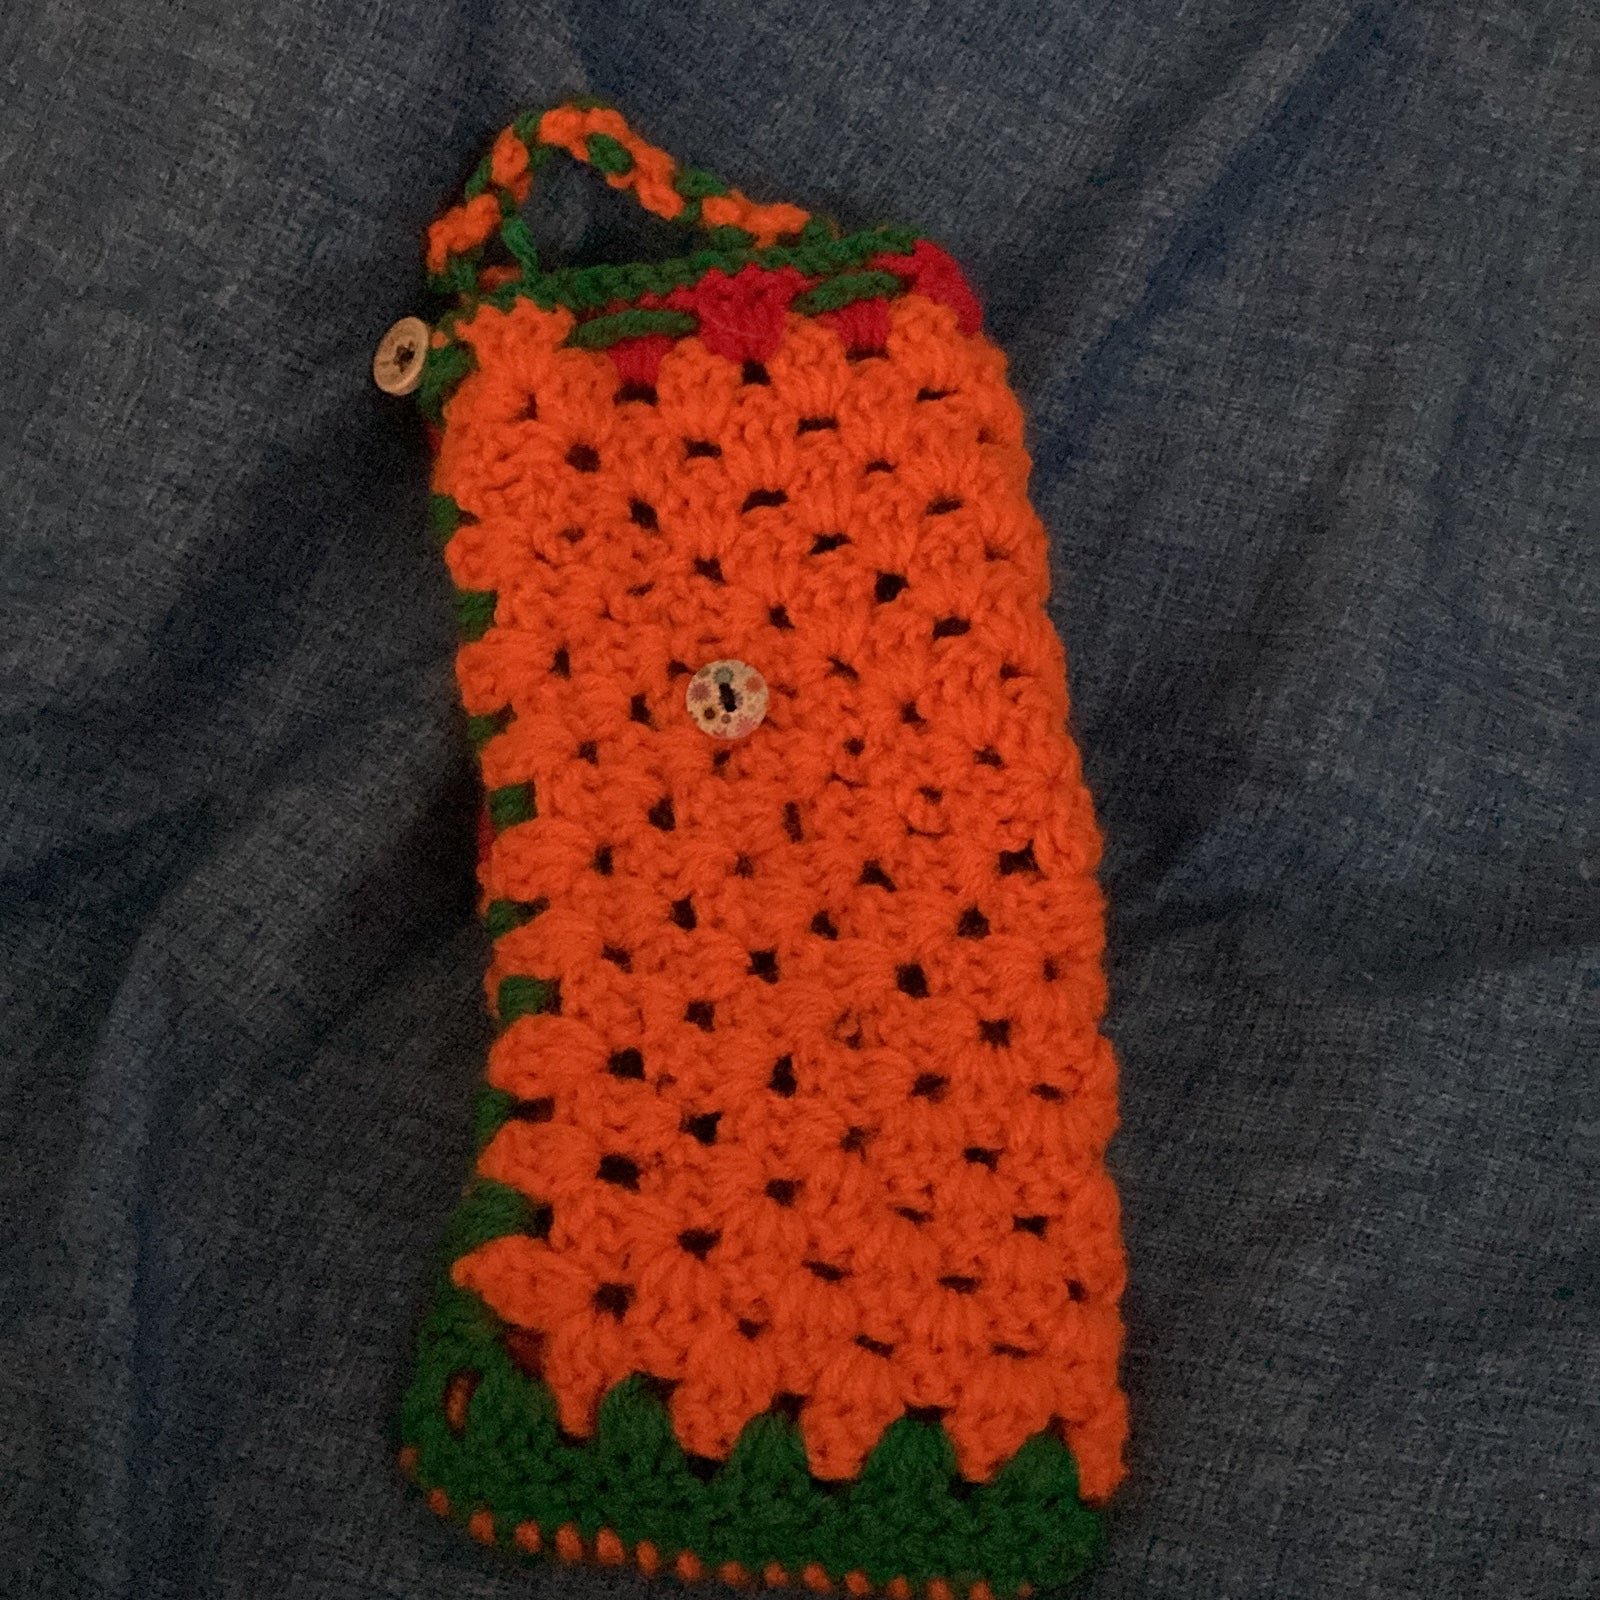 Handmade crochet bag 8IxLdS2Zc